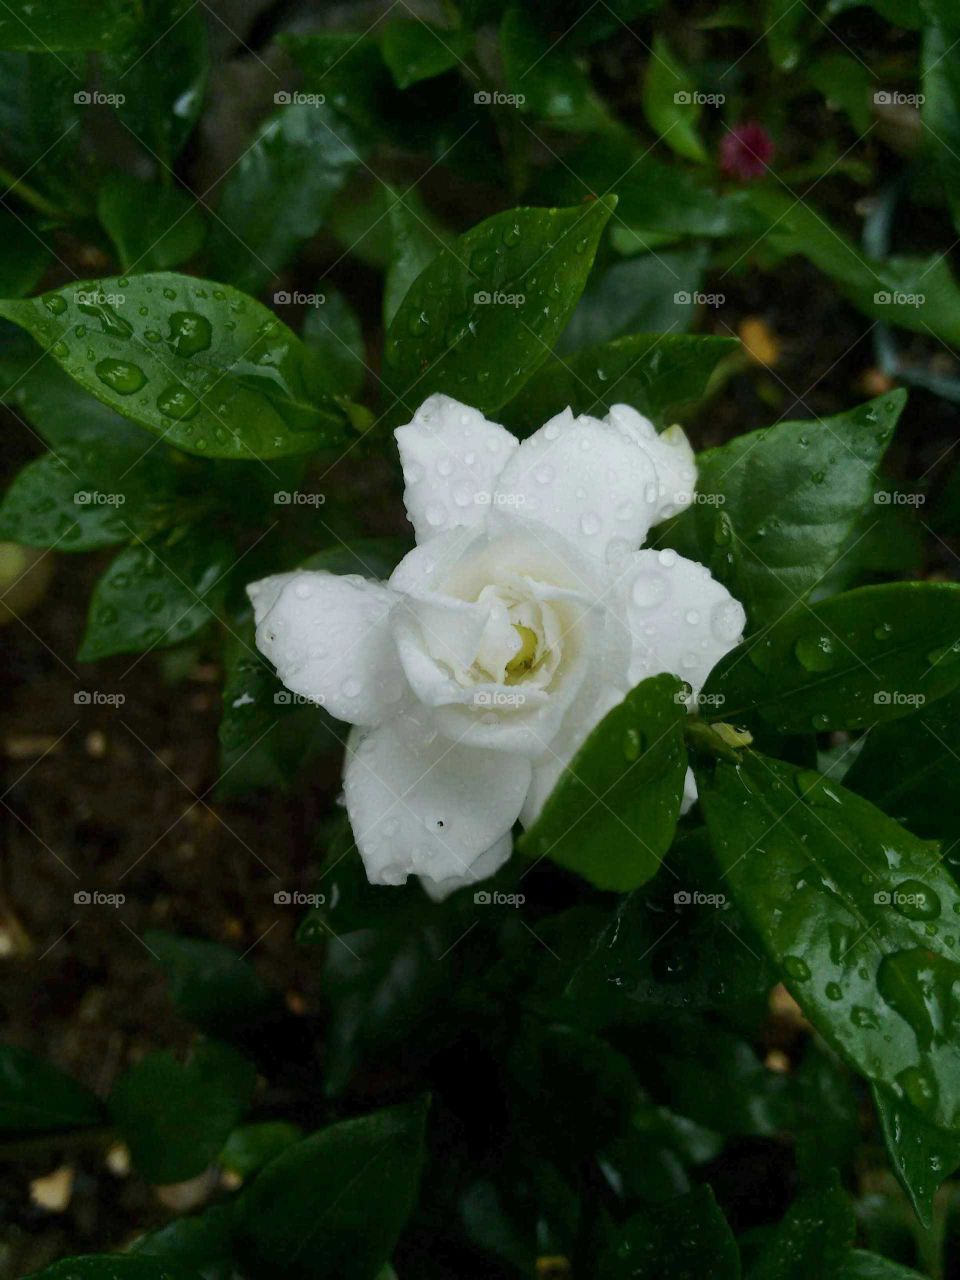 Little white flower. Gardenia jasminoides, the gardenia, cape jasmine, cape jessamine or jasmin.